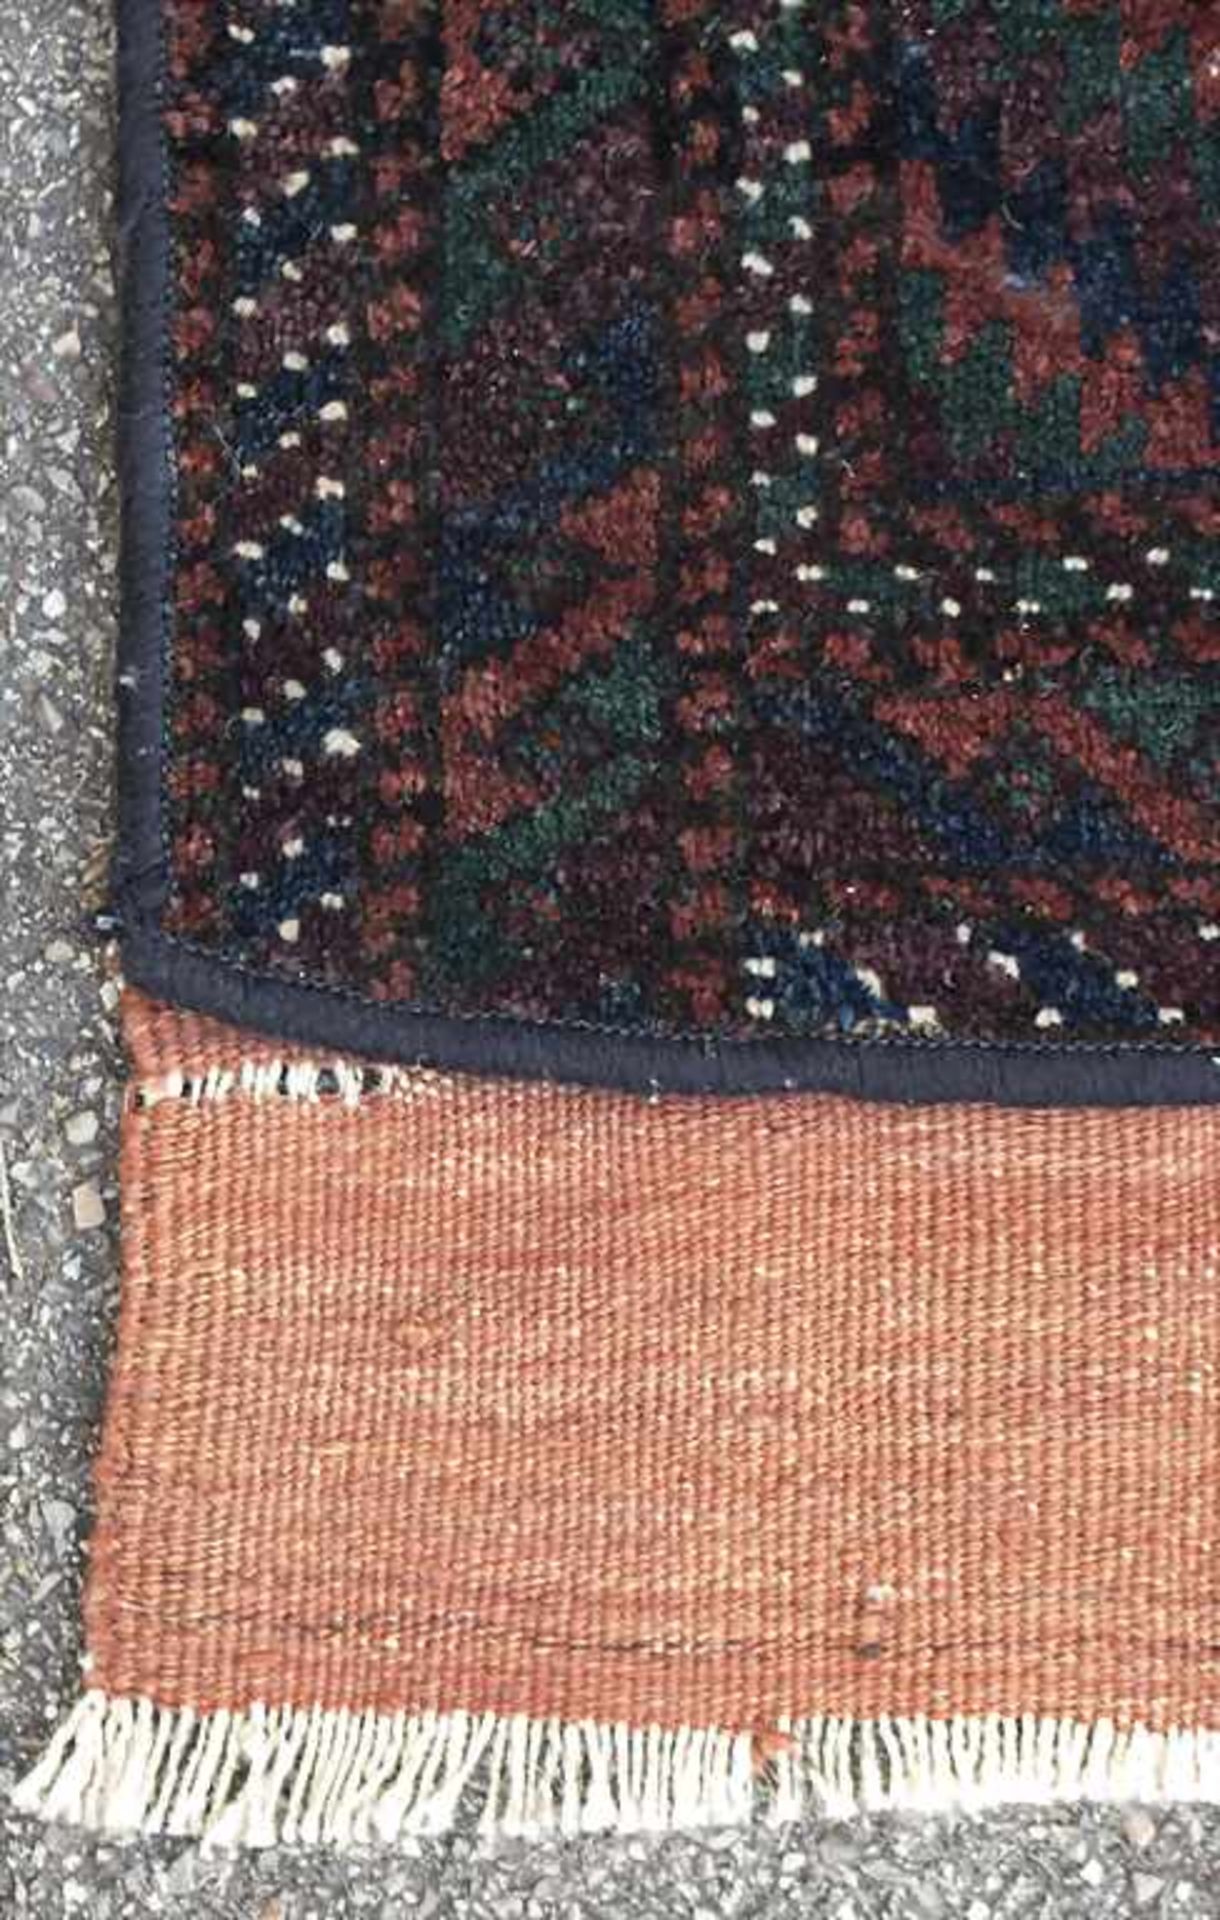 Orientteppich, Zelttasche / An oriental carpet, tentbag - Bild 2 aus 4